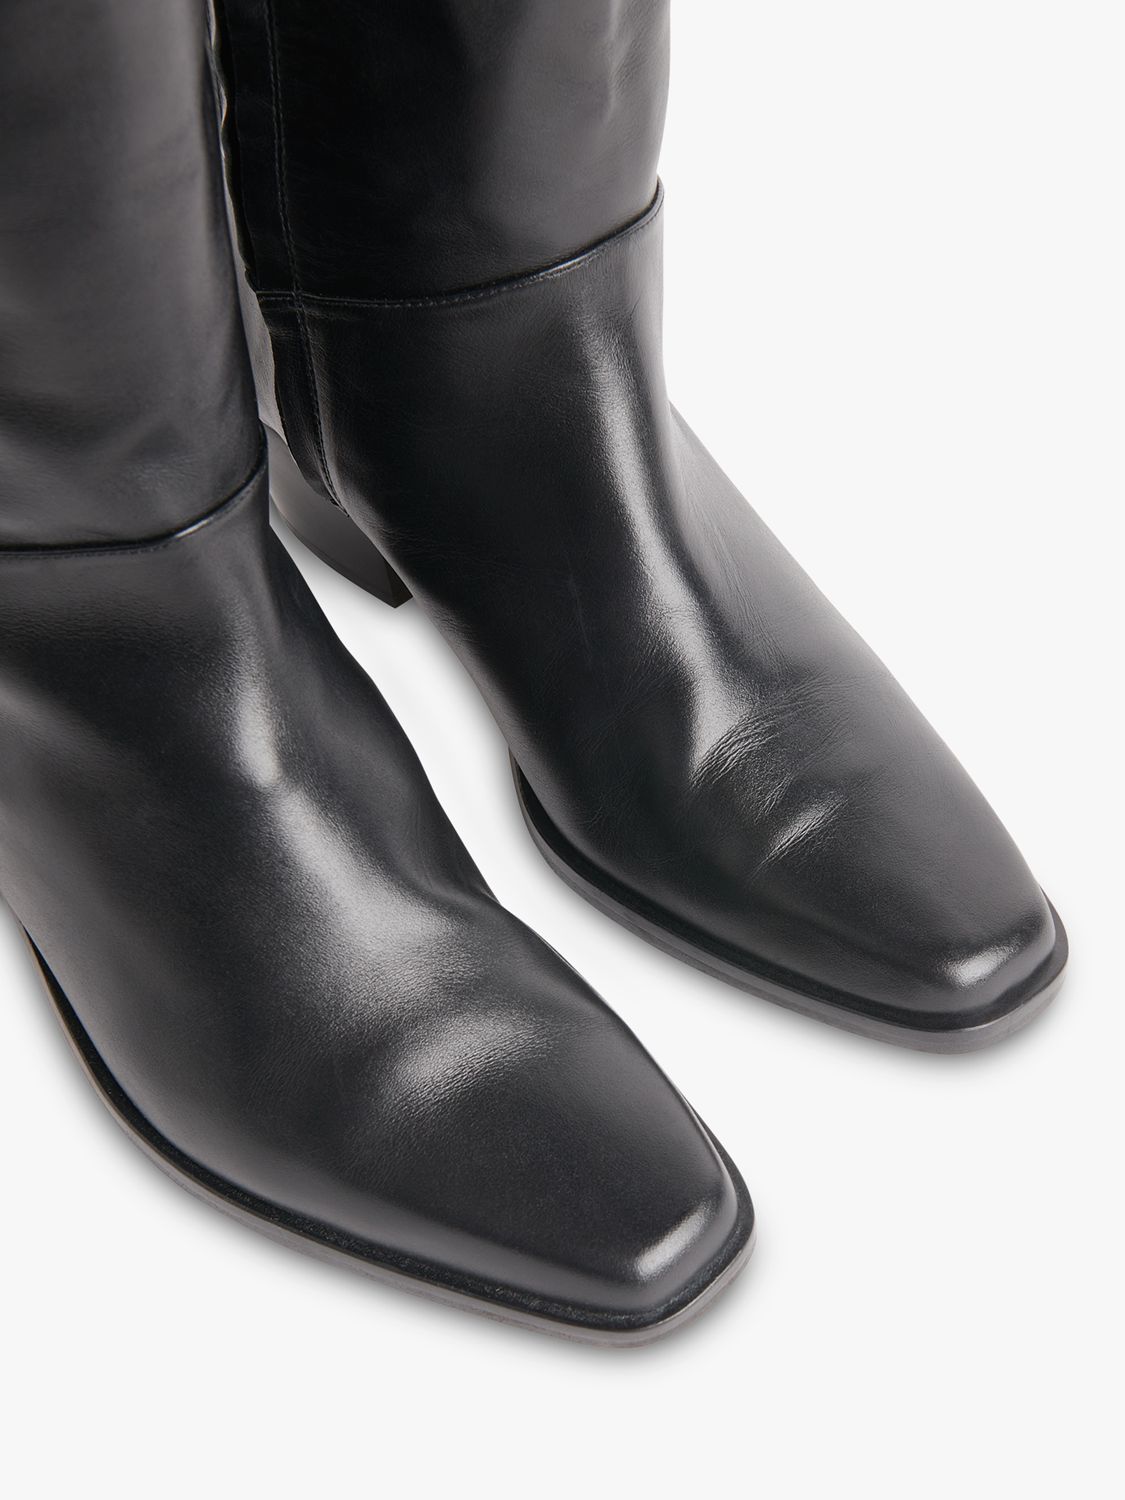 Whistles Asa Block Heel Western Boots, Black at John Lewis & Partners